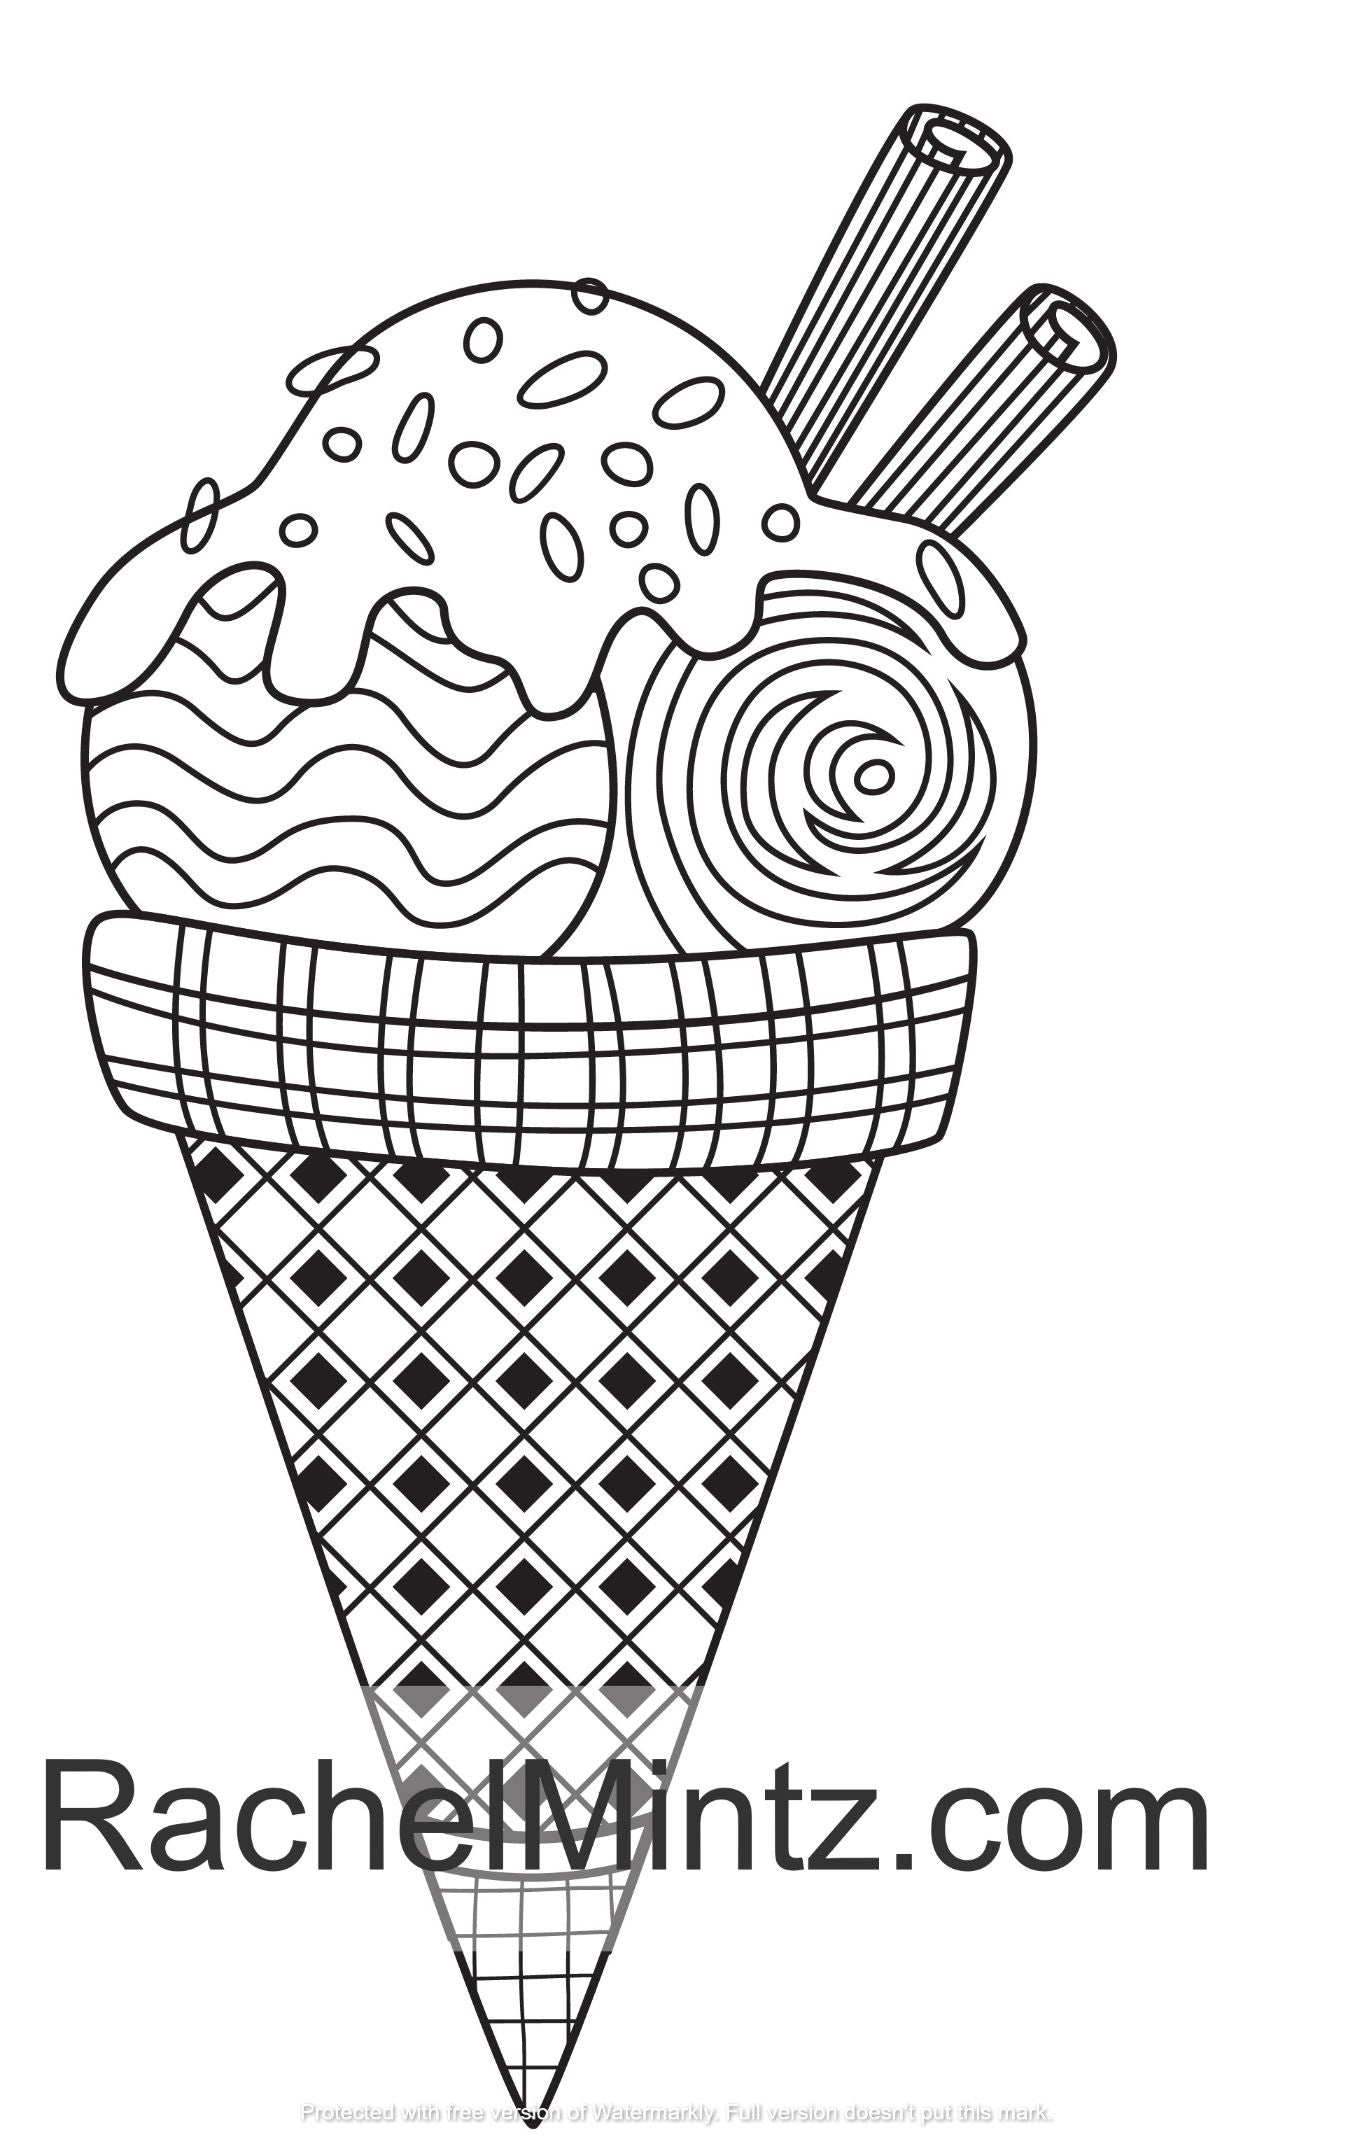 The Giant Ice Cream - Summer Fun Coloring Book (Digital PDF Format)